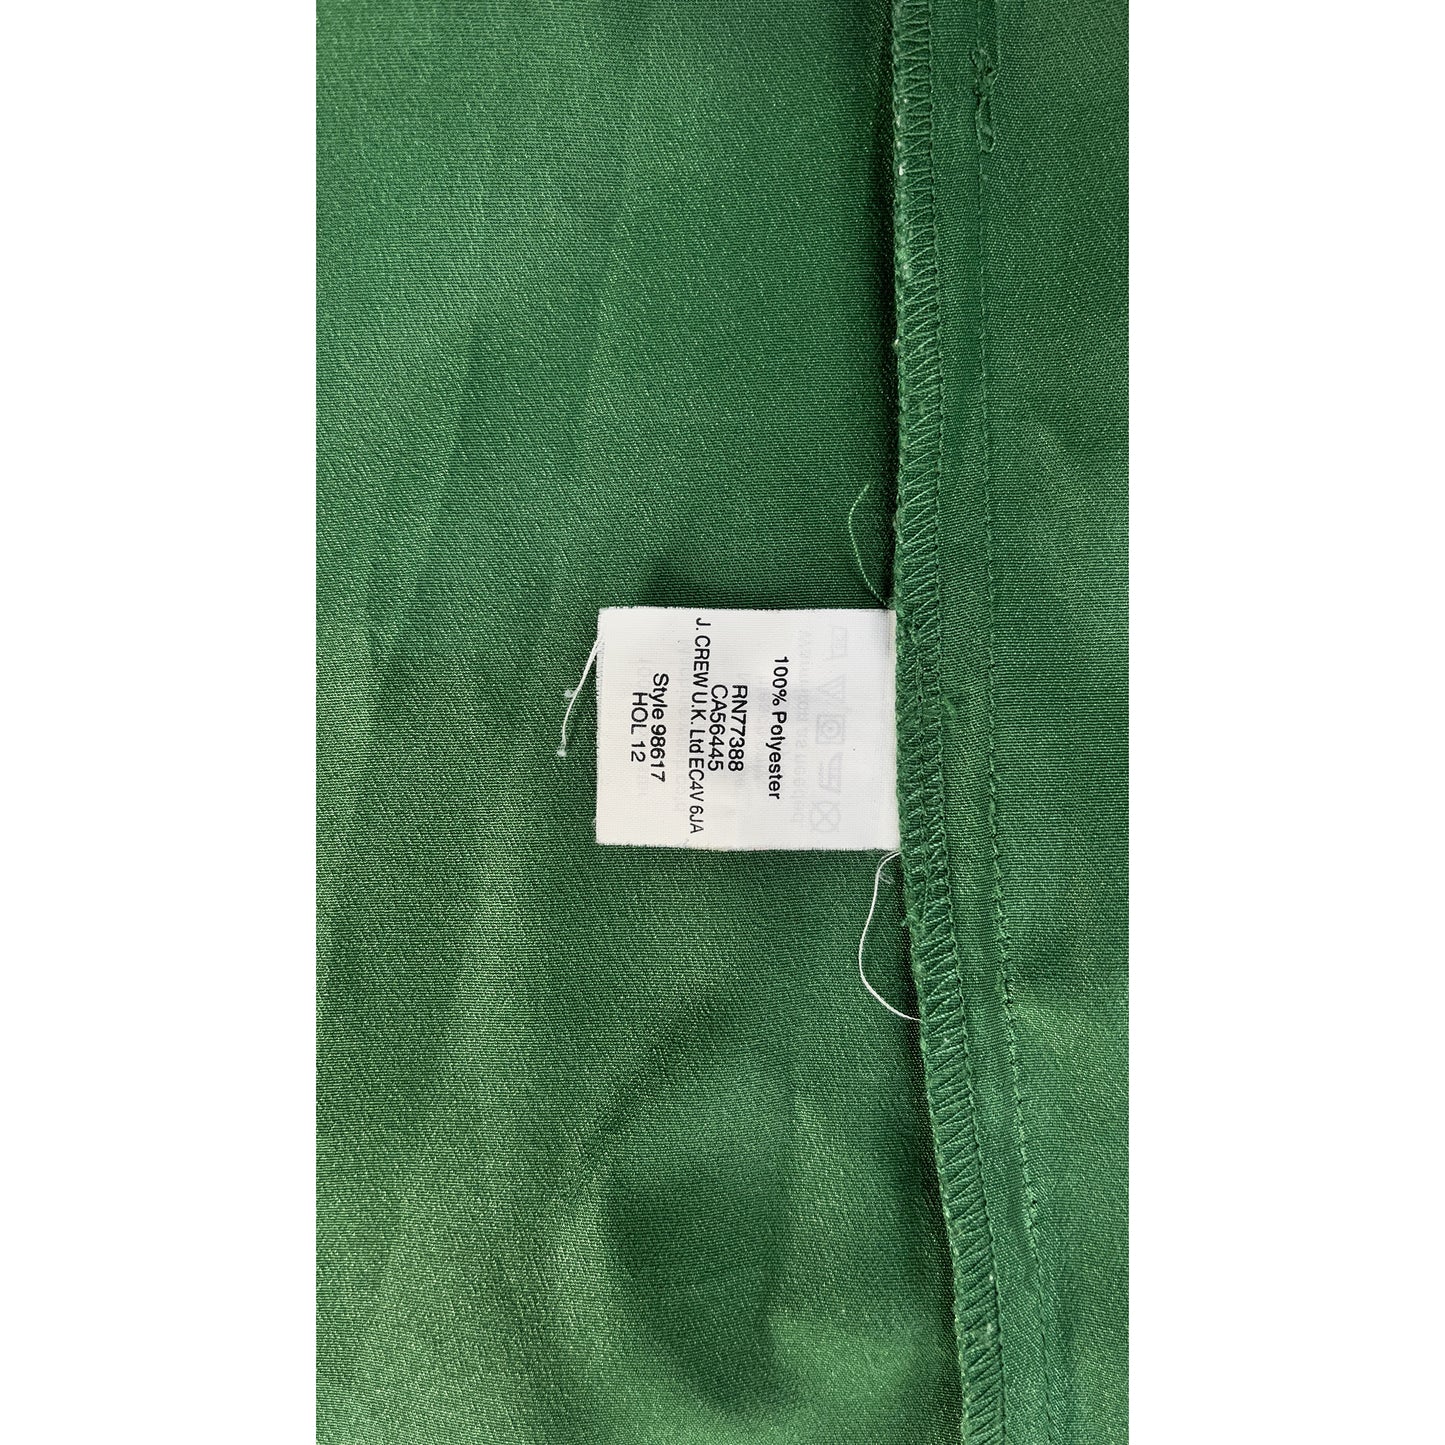 J. Crew Top Long Sleeve Green Size XS SKU 000226-6